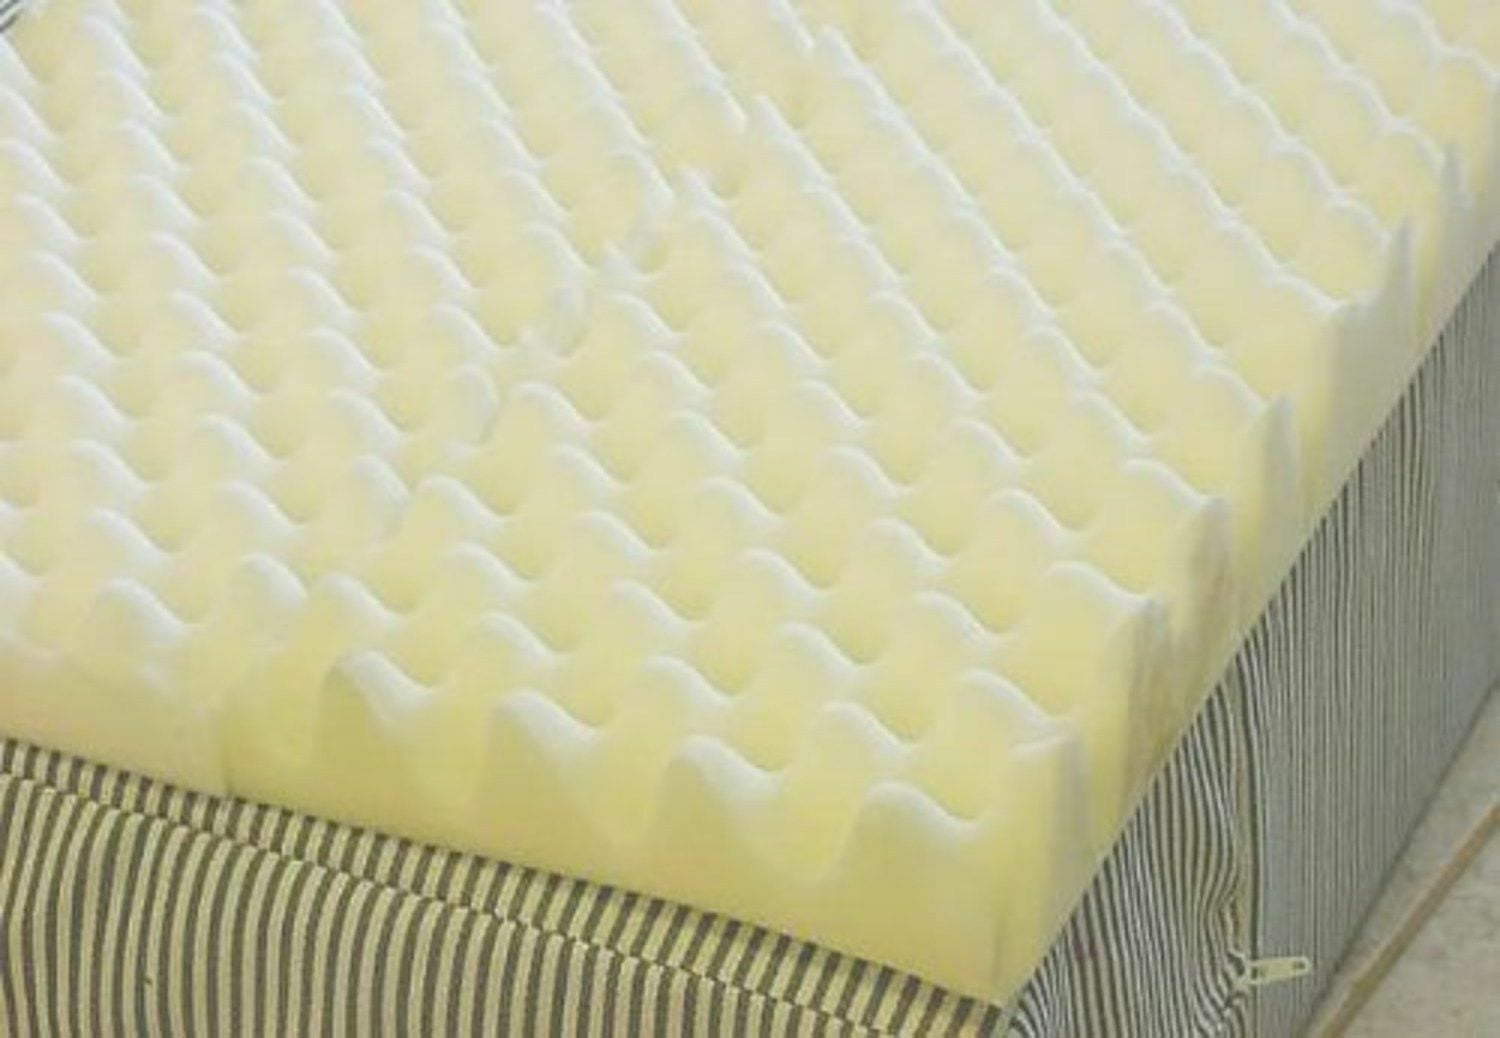 72 L X 34 W X 4 Inch 4 inch Foam Twin Bed Pad Mattress Convoluted Egg Crate 